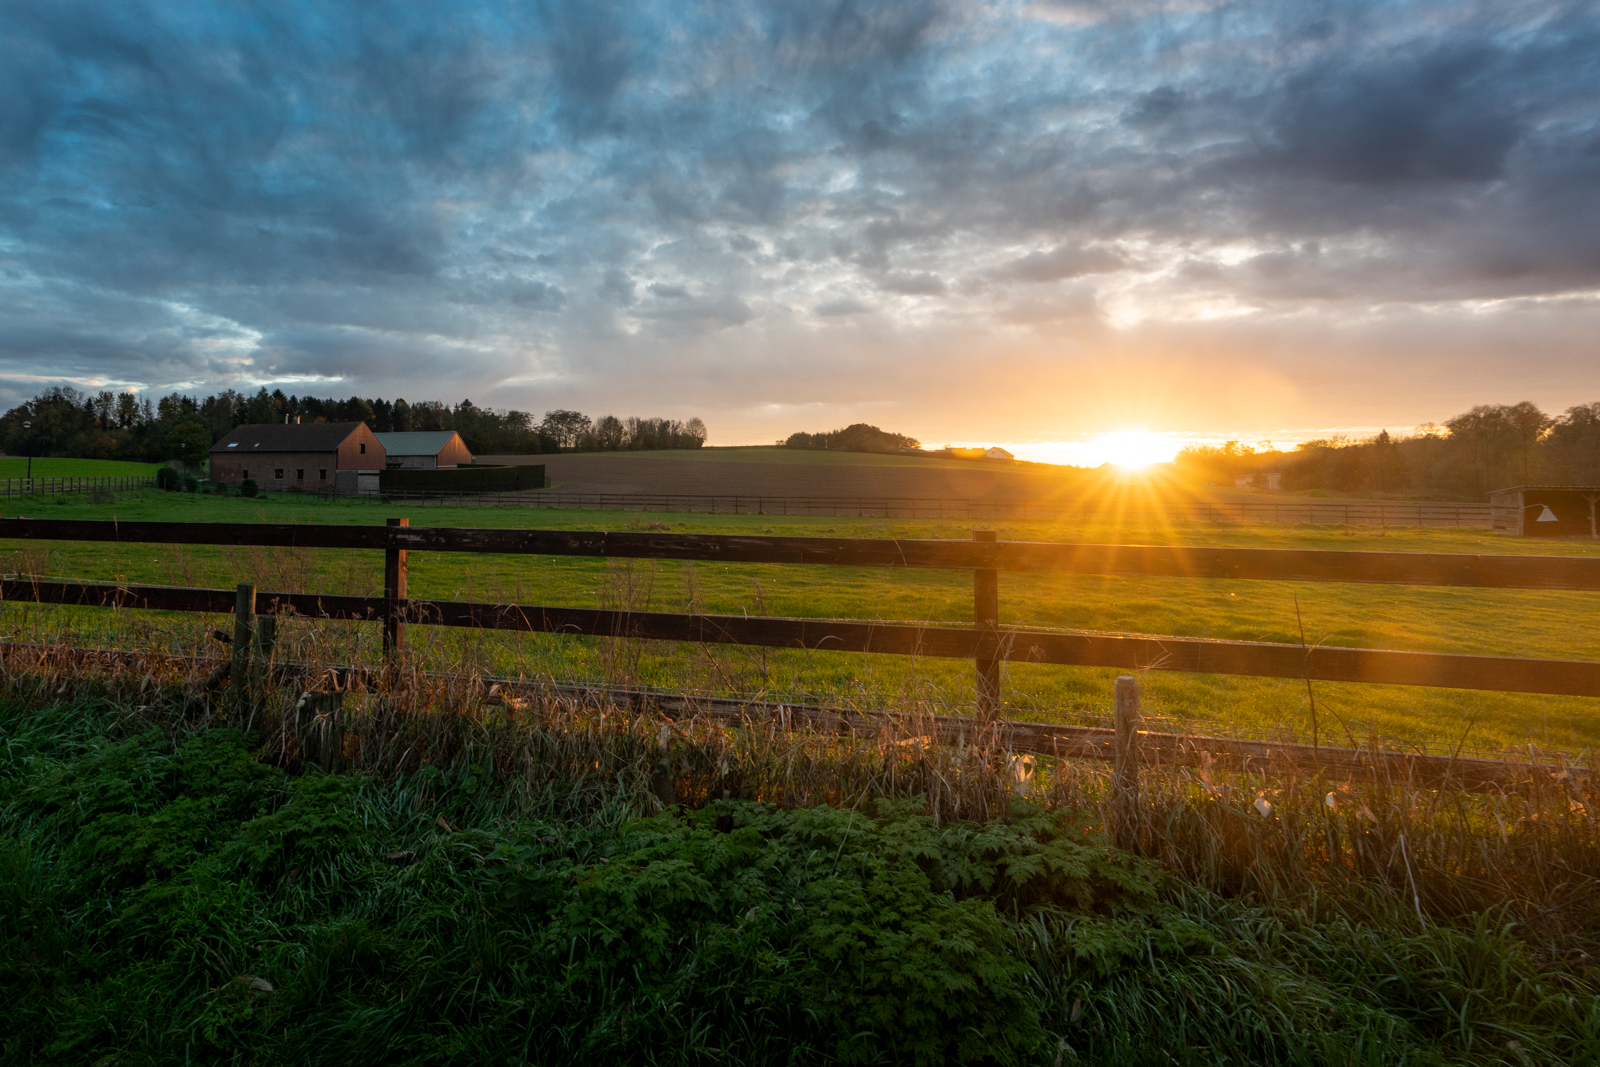 Sunset over a farm field in Leefdaal, Belgium